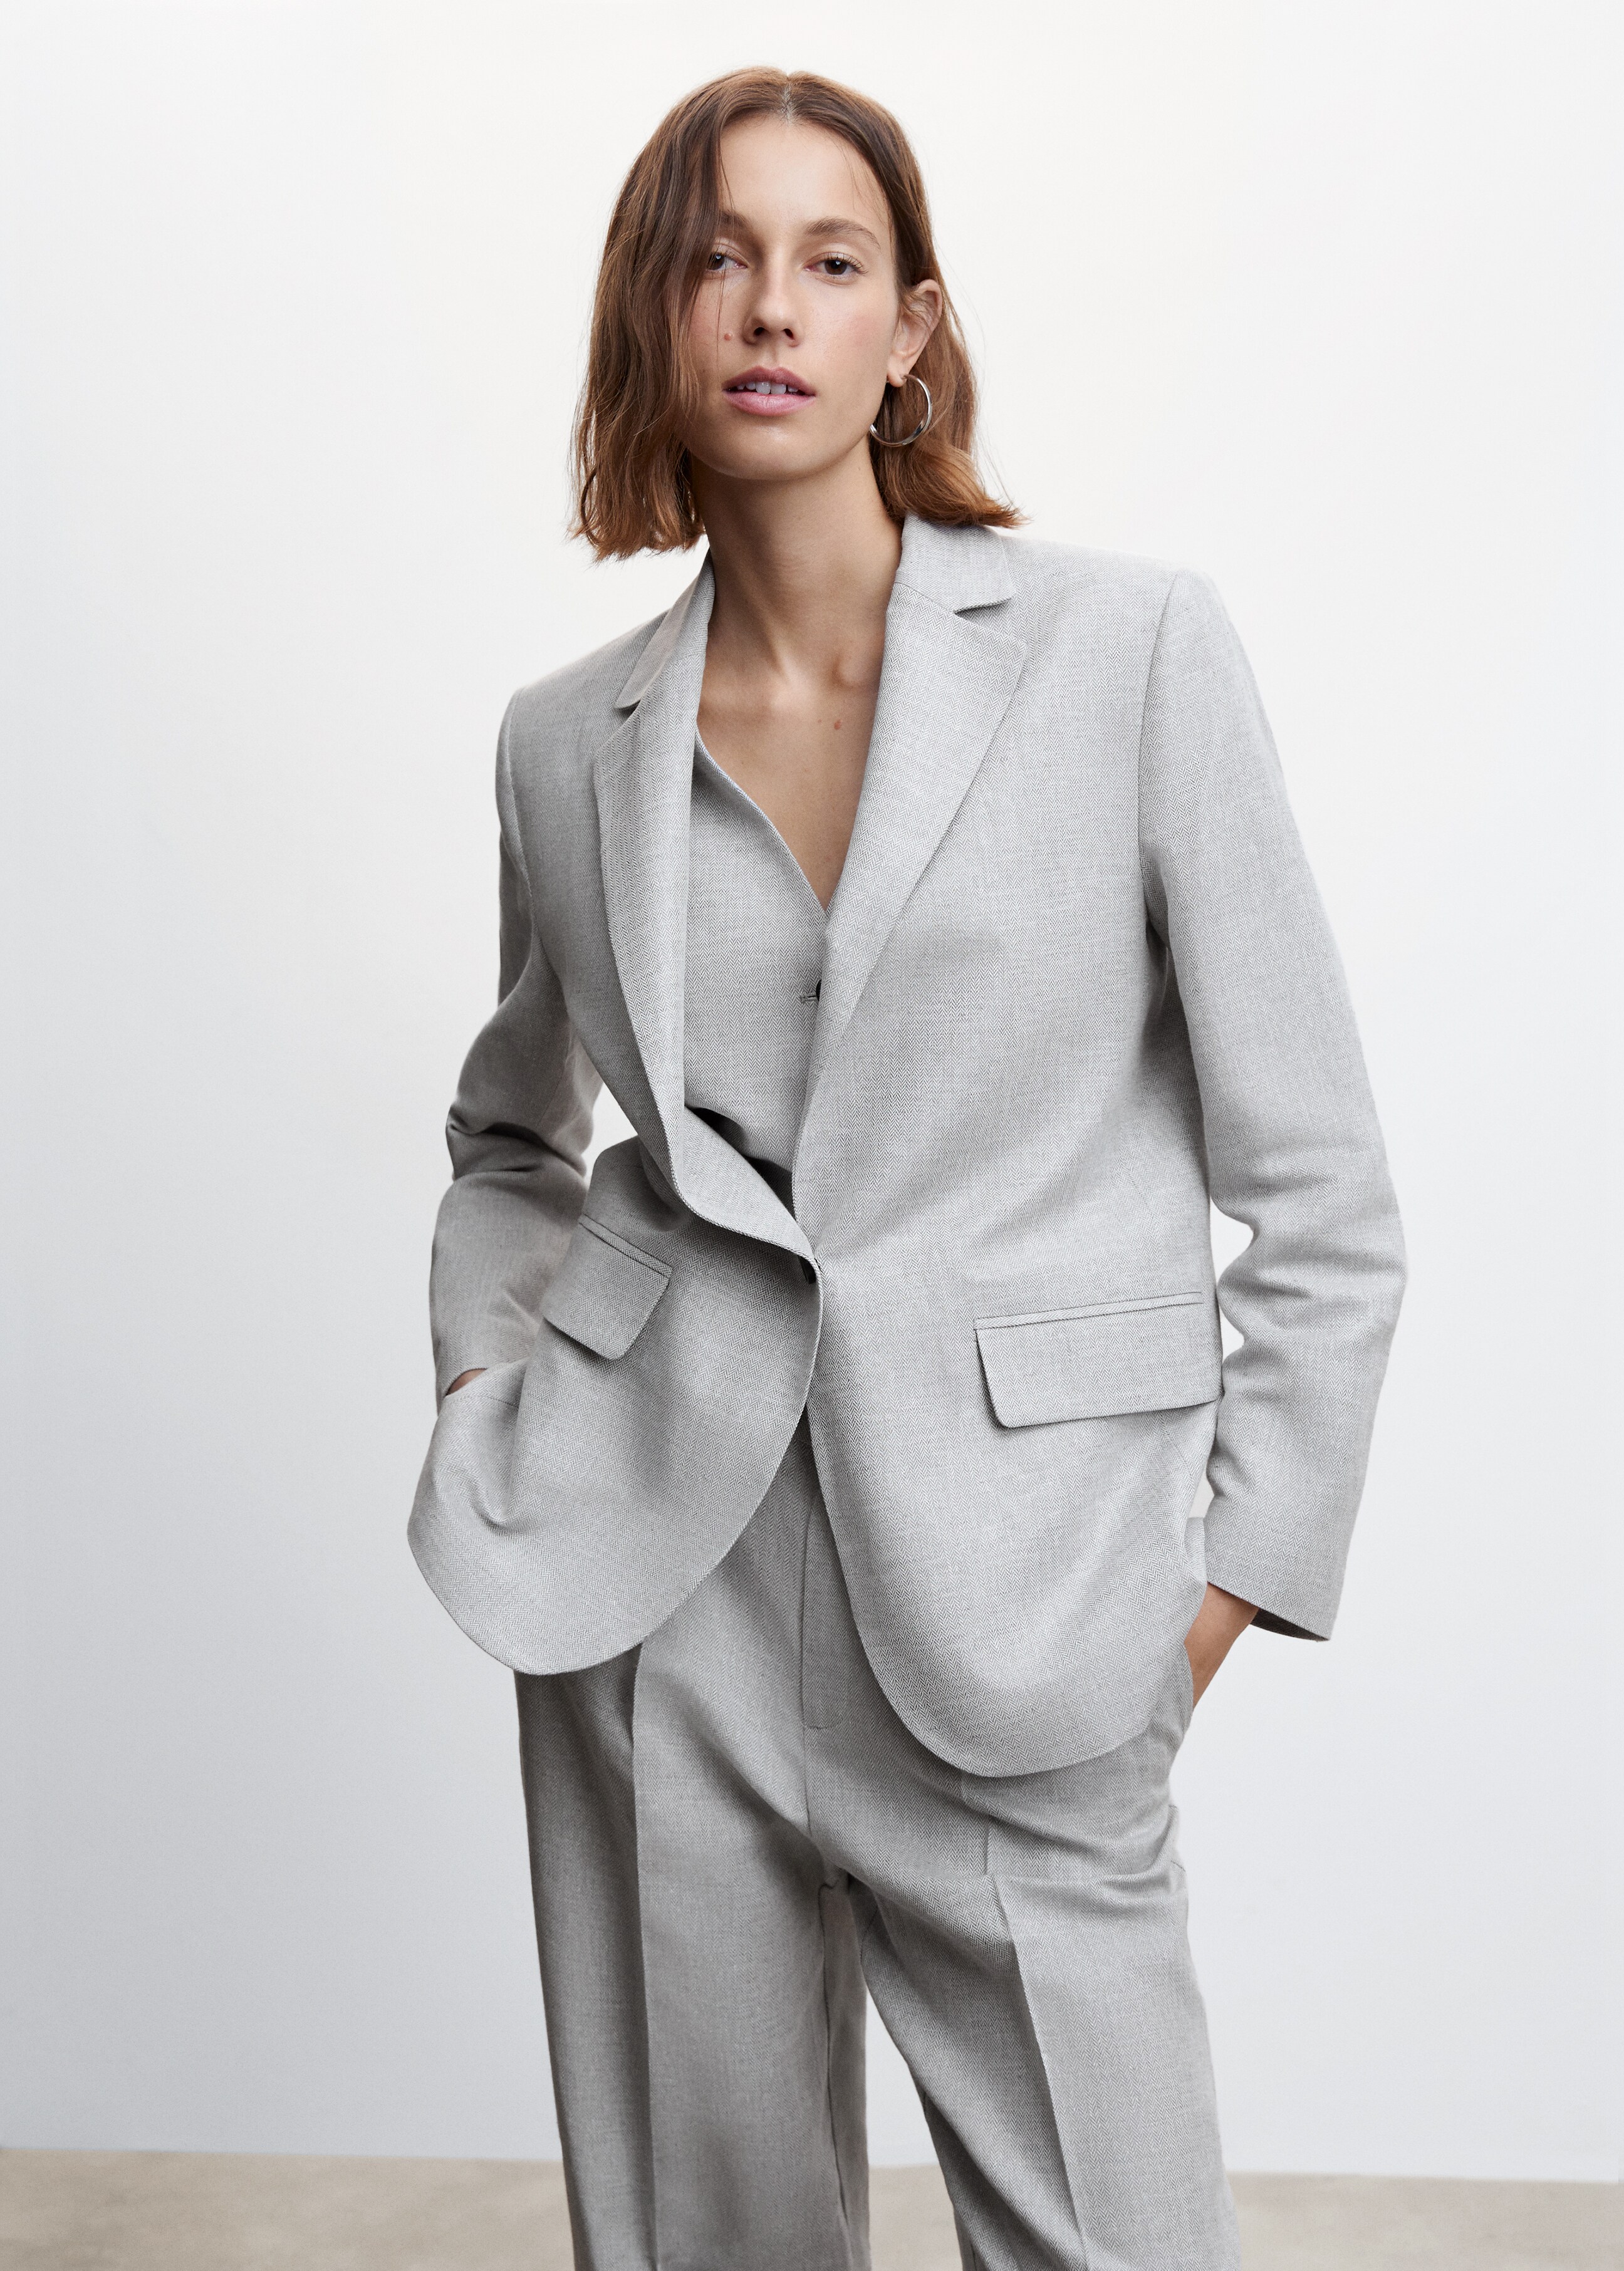 Herringbone linen suit jacket - Medium plane